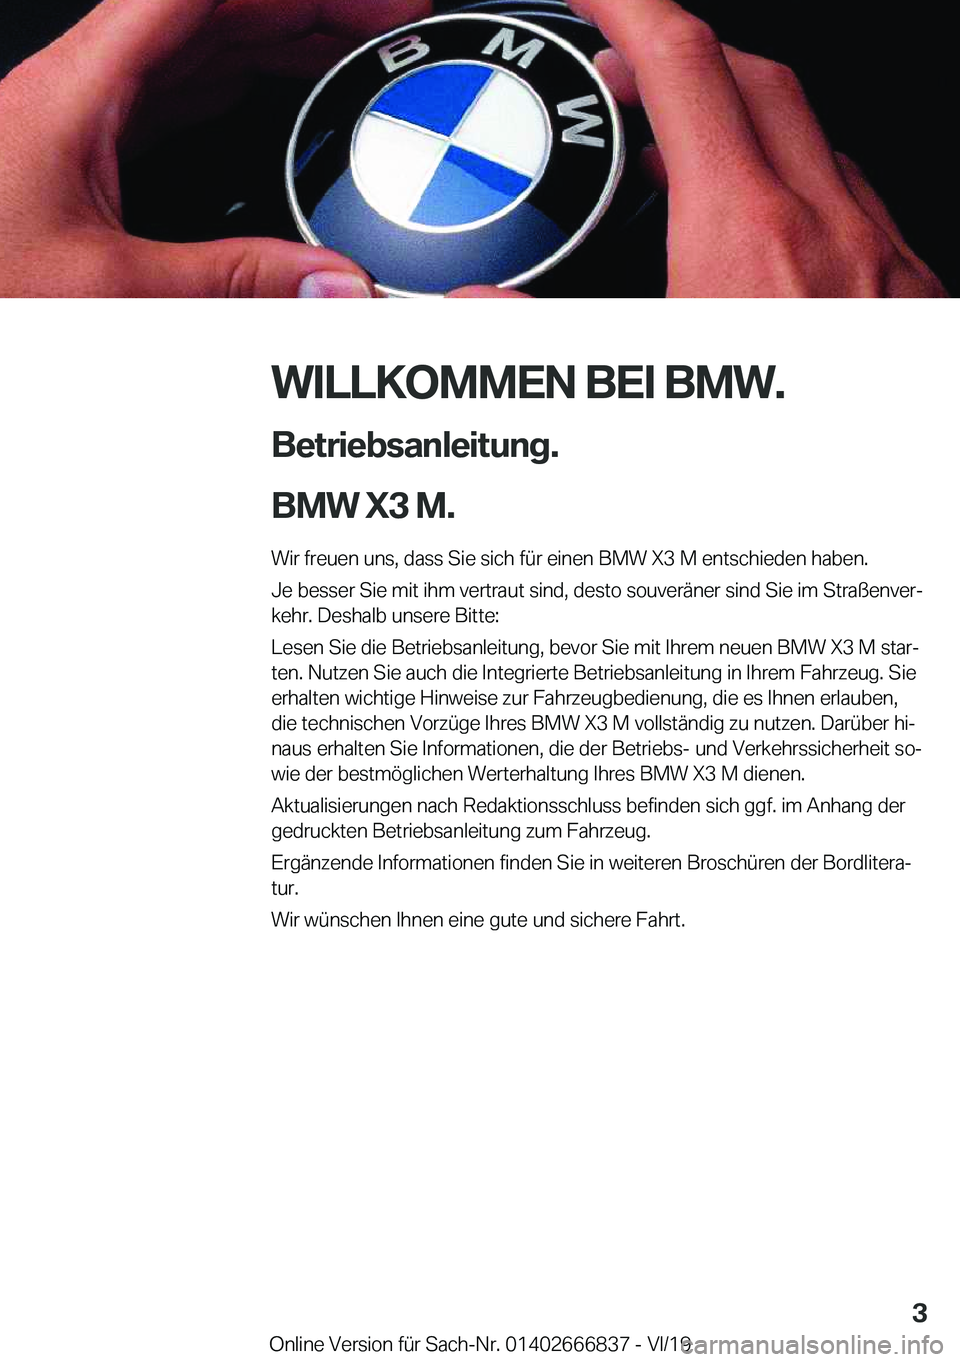 BMW X3 M 2020  Betriebsanleitungen (in German) �W�I�L�L�K�O�M�M�E�N��B�E�I��B�M�W�.�B�e�t�r�i�e�b�s�a�n�l�e�i�t�u�n�g�.
�B�M�W��X�3��M�. �W�i�r��f�r�e�u�e�n��u�n�s�,��d�a�s�s��S�i�e��s�i�c�h��f�